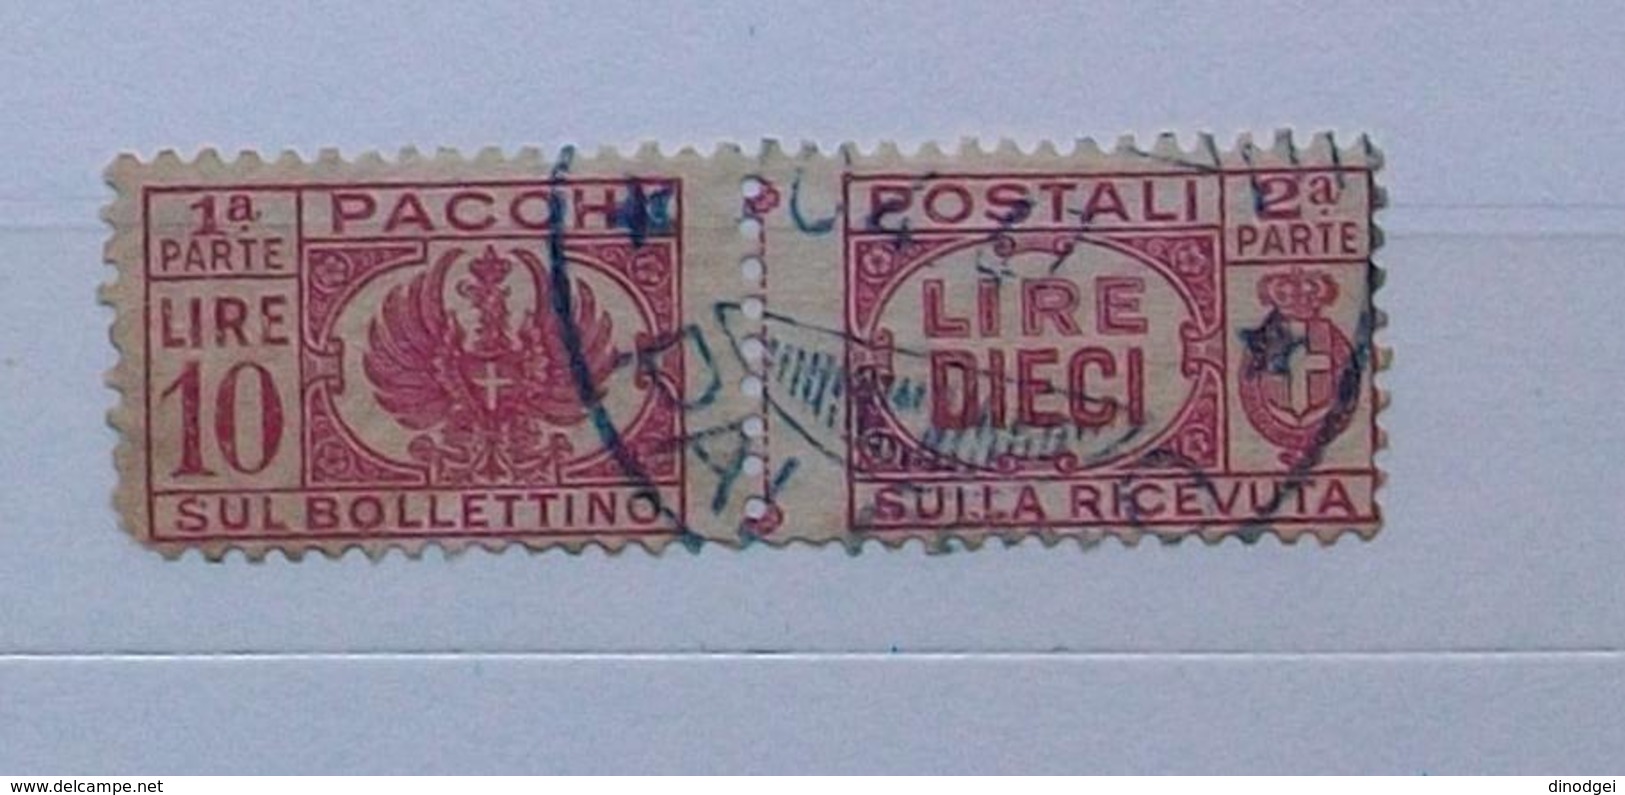 Italia Luogotenenza -1946 - Pacchi Postali Lt.10 Usato - Senza Fasci Al Centro. - Postal Parcels